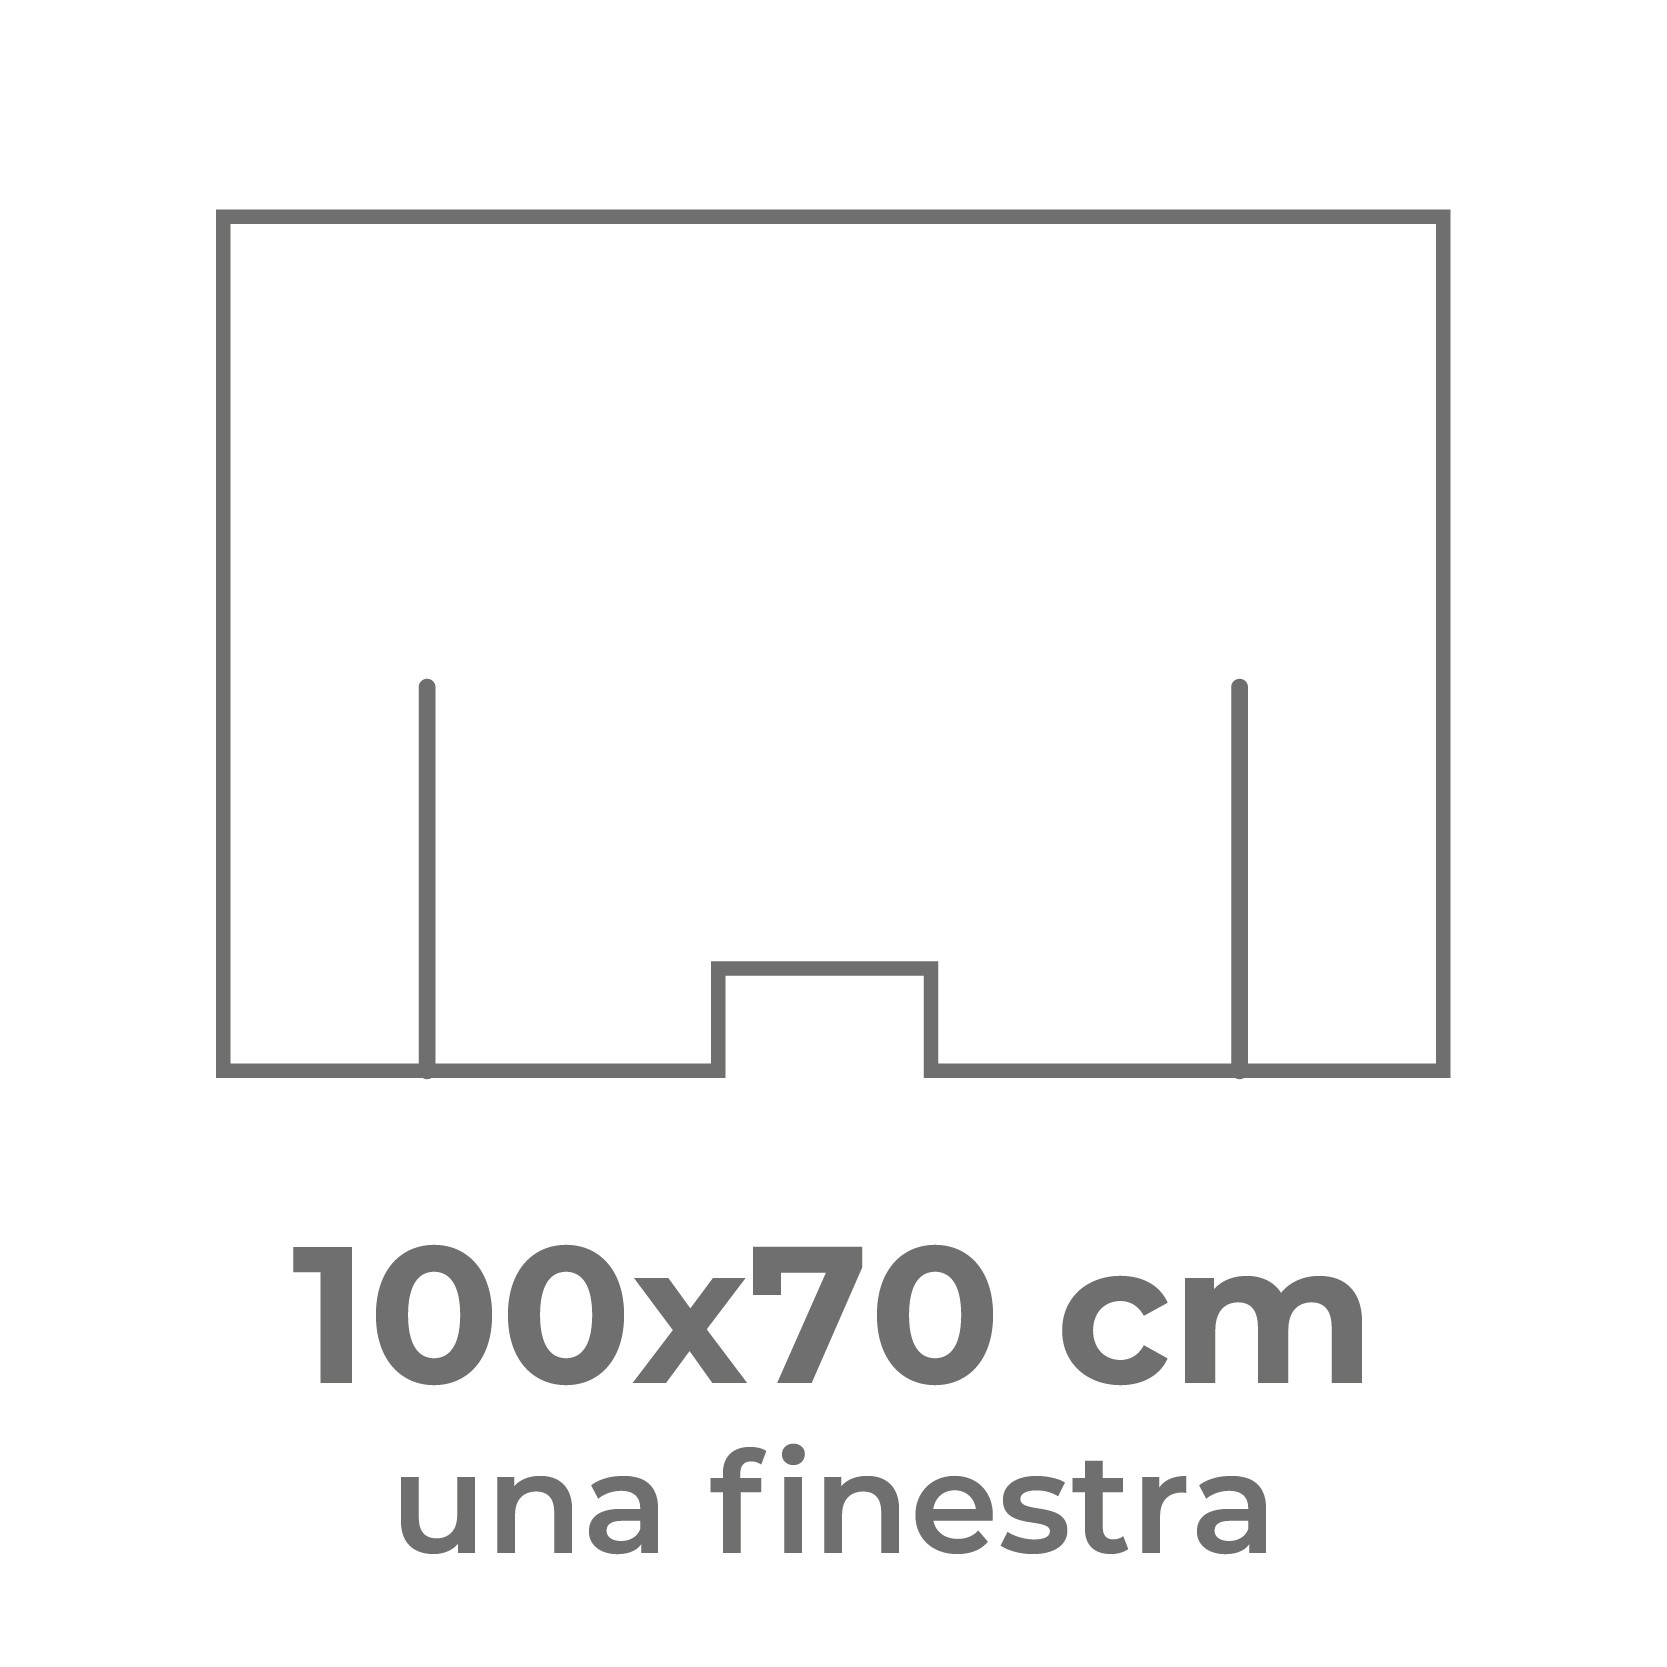 100x70 cm (uso singolo)